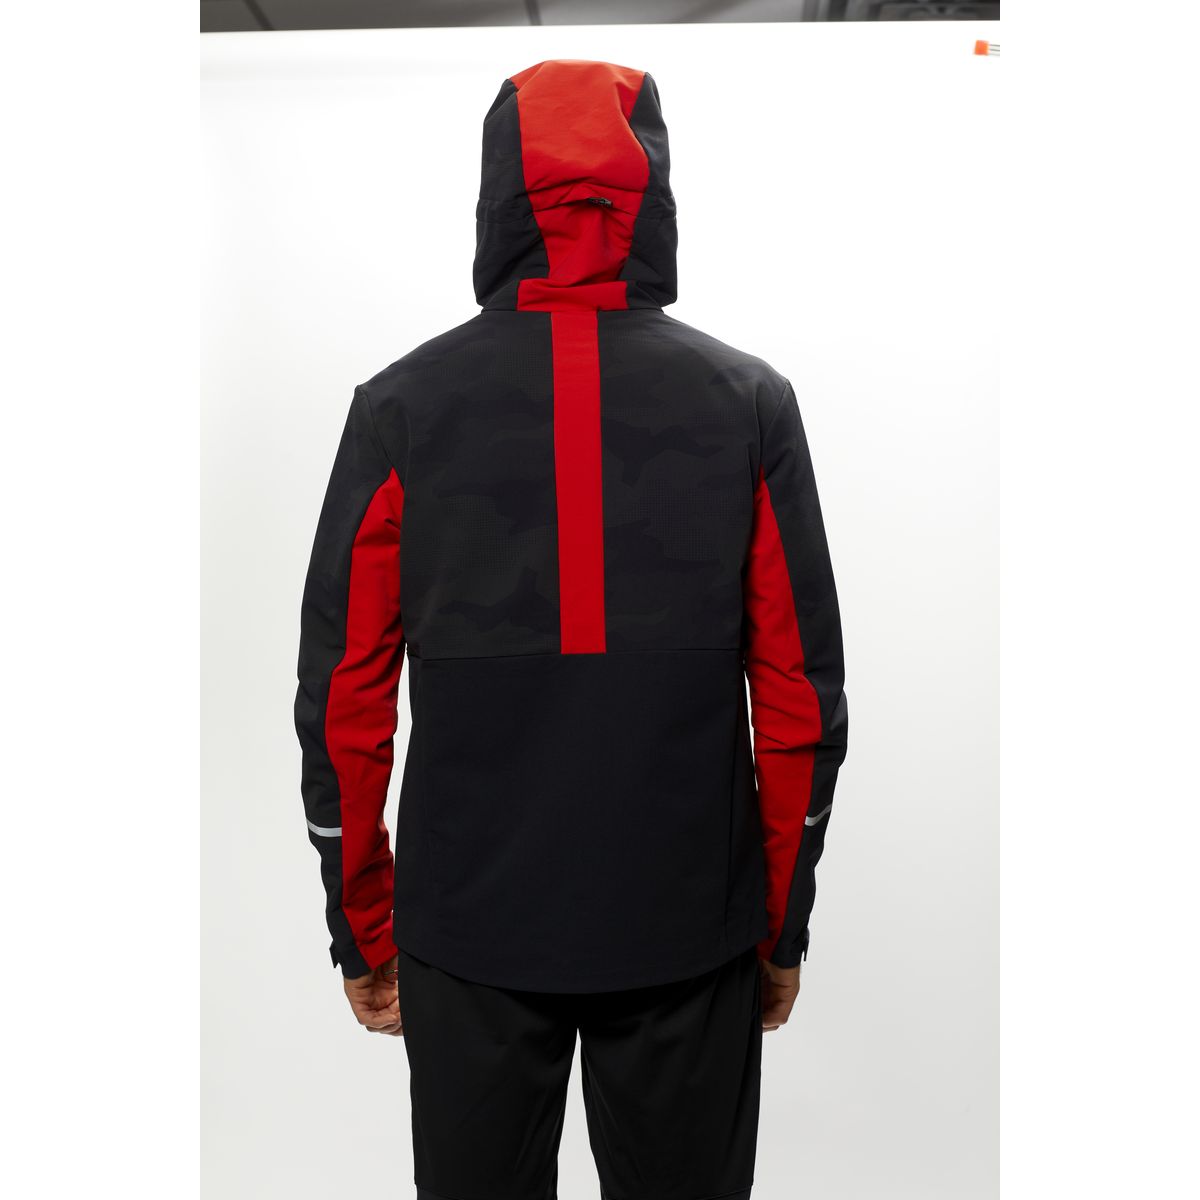 Surmount - Men's Soft Shield Jacket